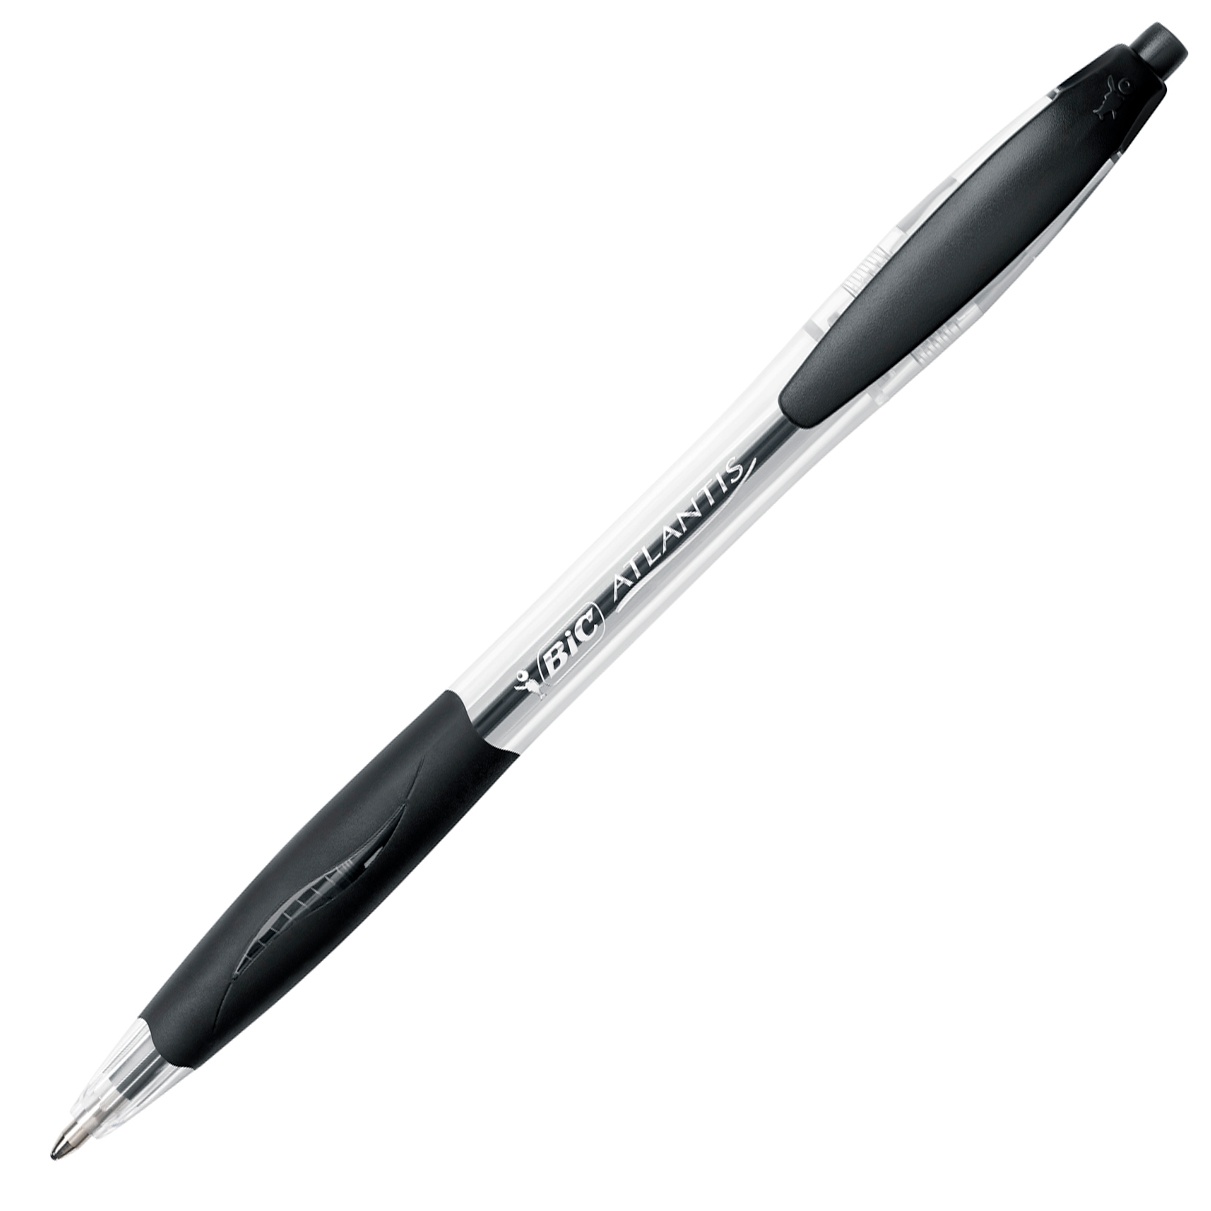 Atlantis Classic Ballpoint Pen in the group Pens / Office / Office Pens at Pen Store (100220_r)